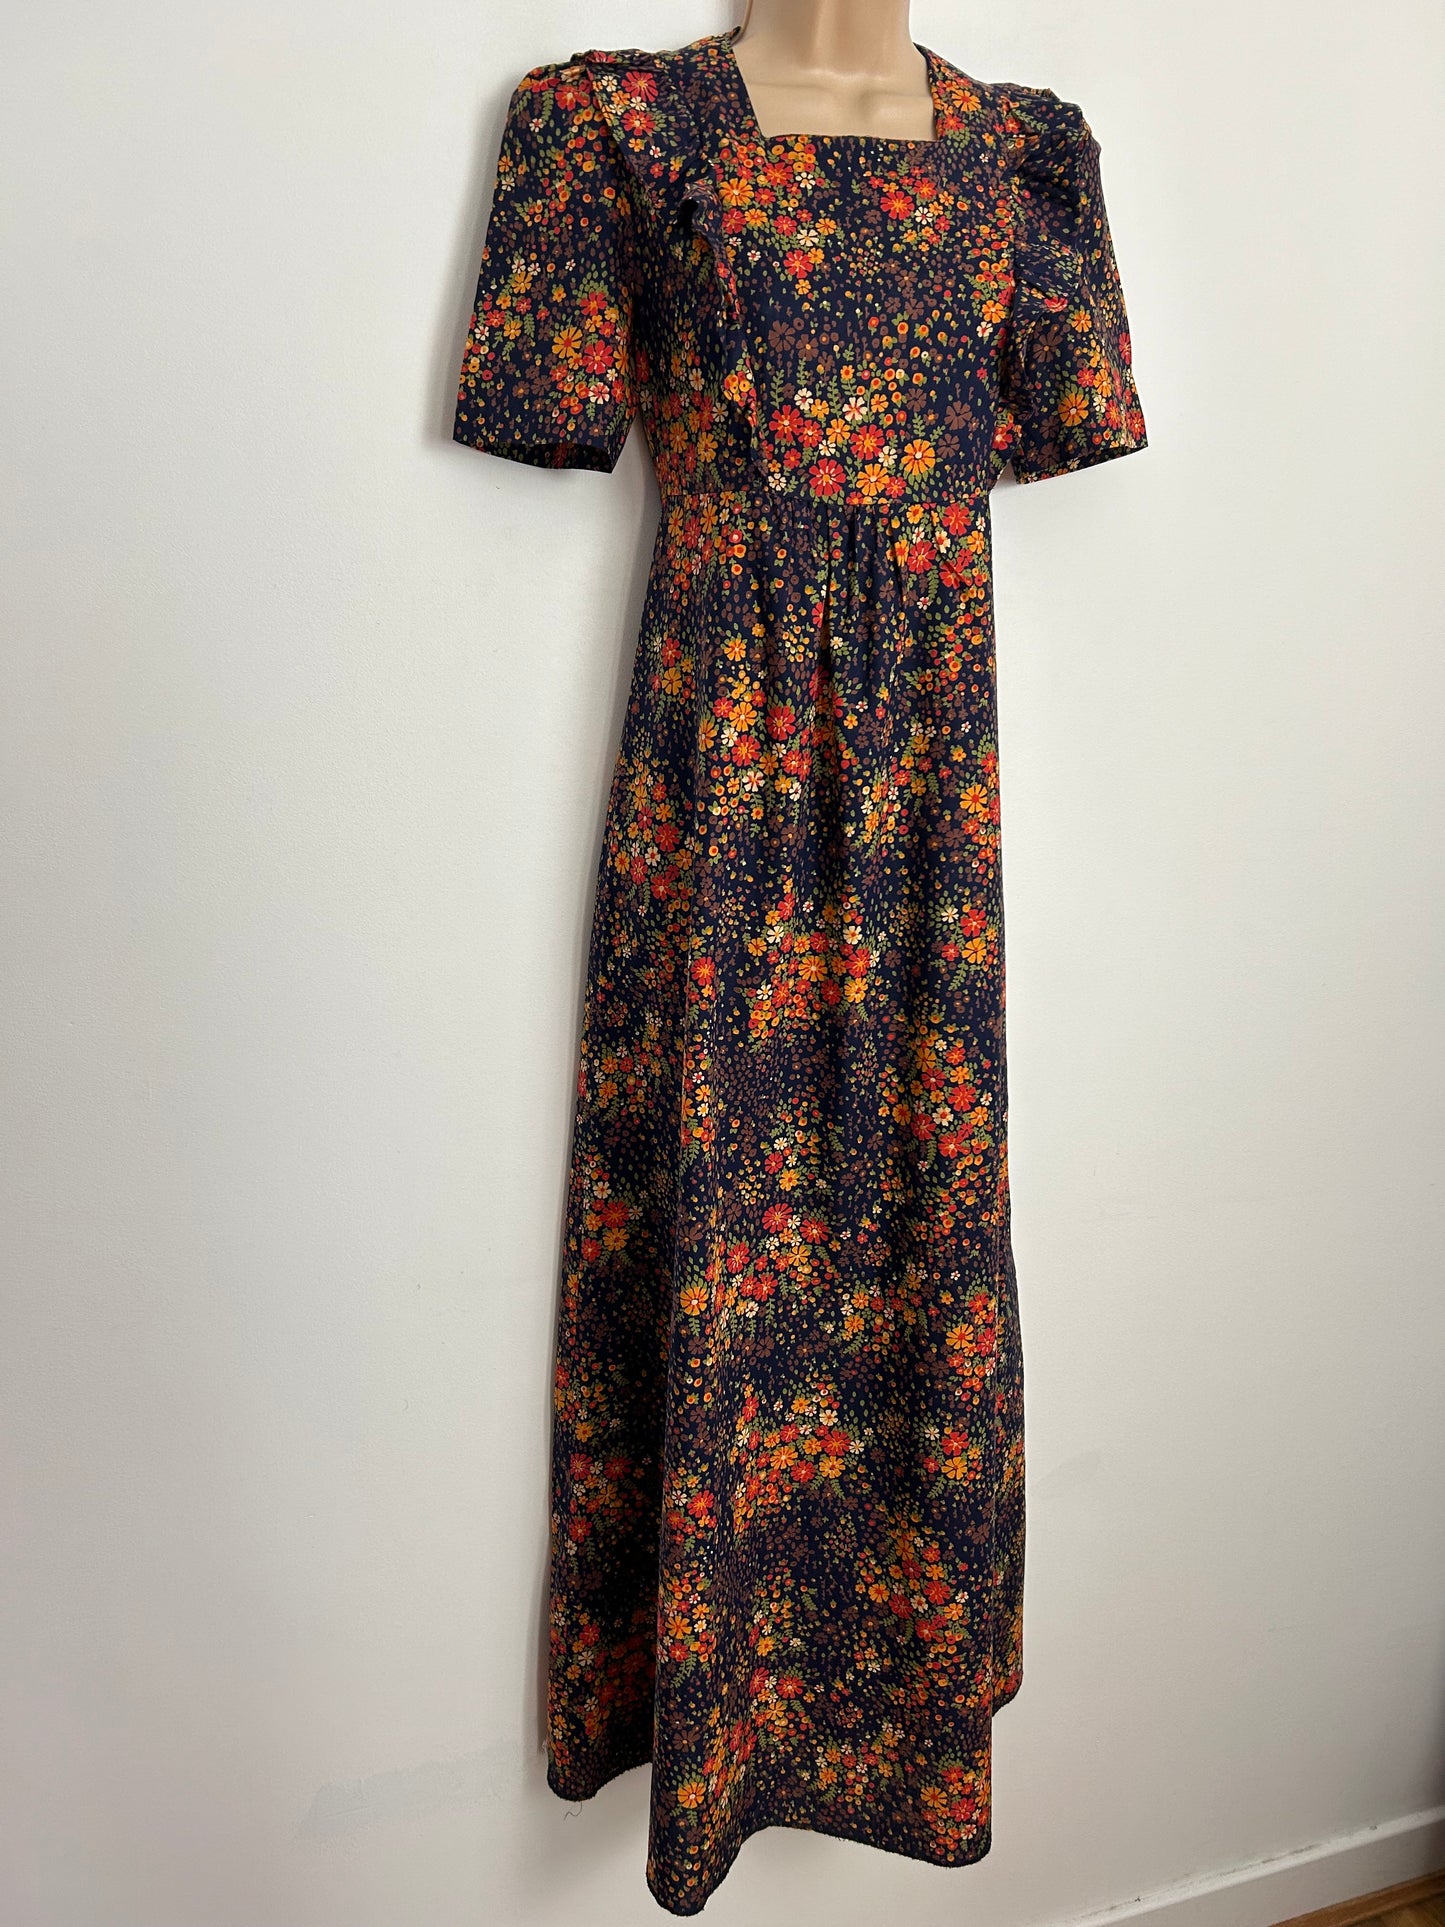 Vintage 1970s TOODAY AT ETAM UK Size 8 Navy Blue & Orange Floral Print Cotton Prairie Boho Maxi Dress